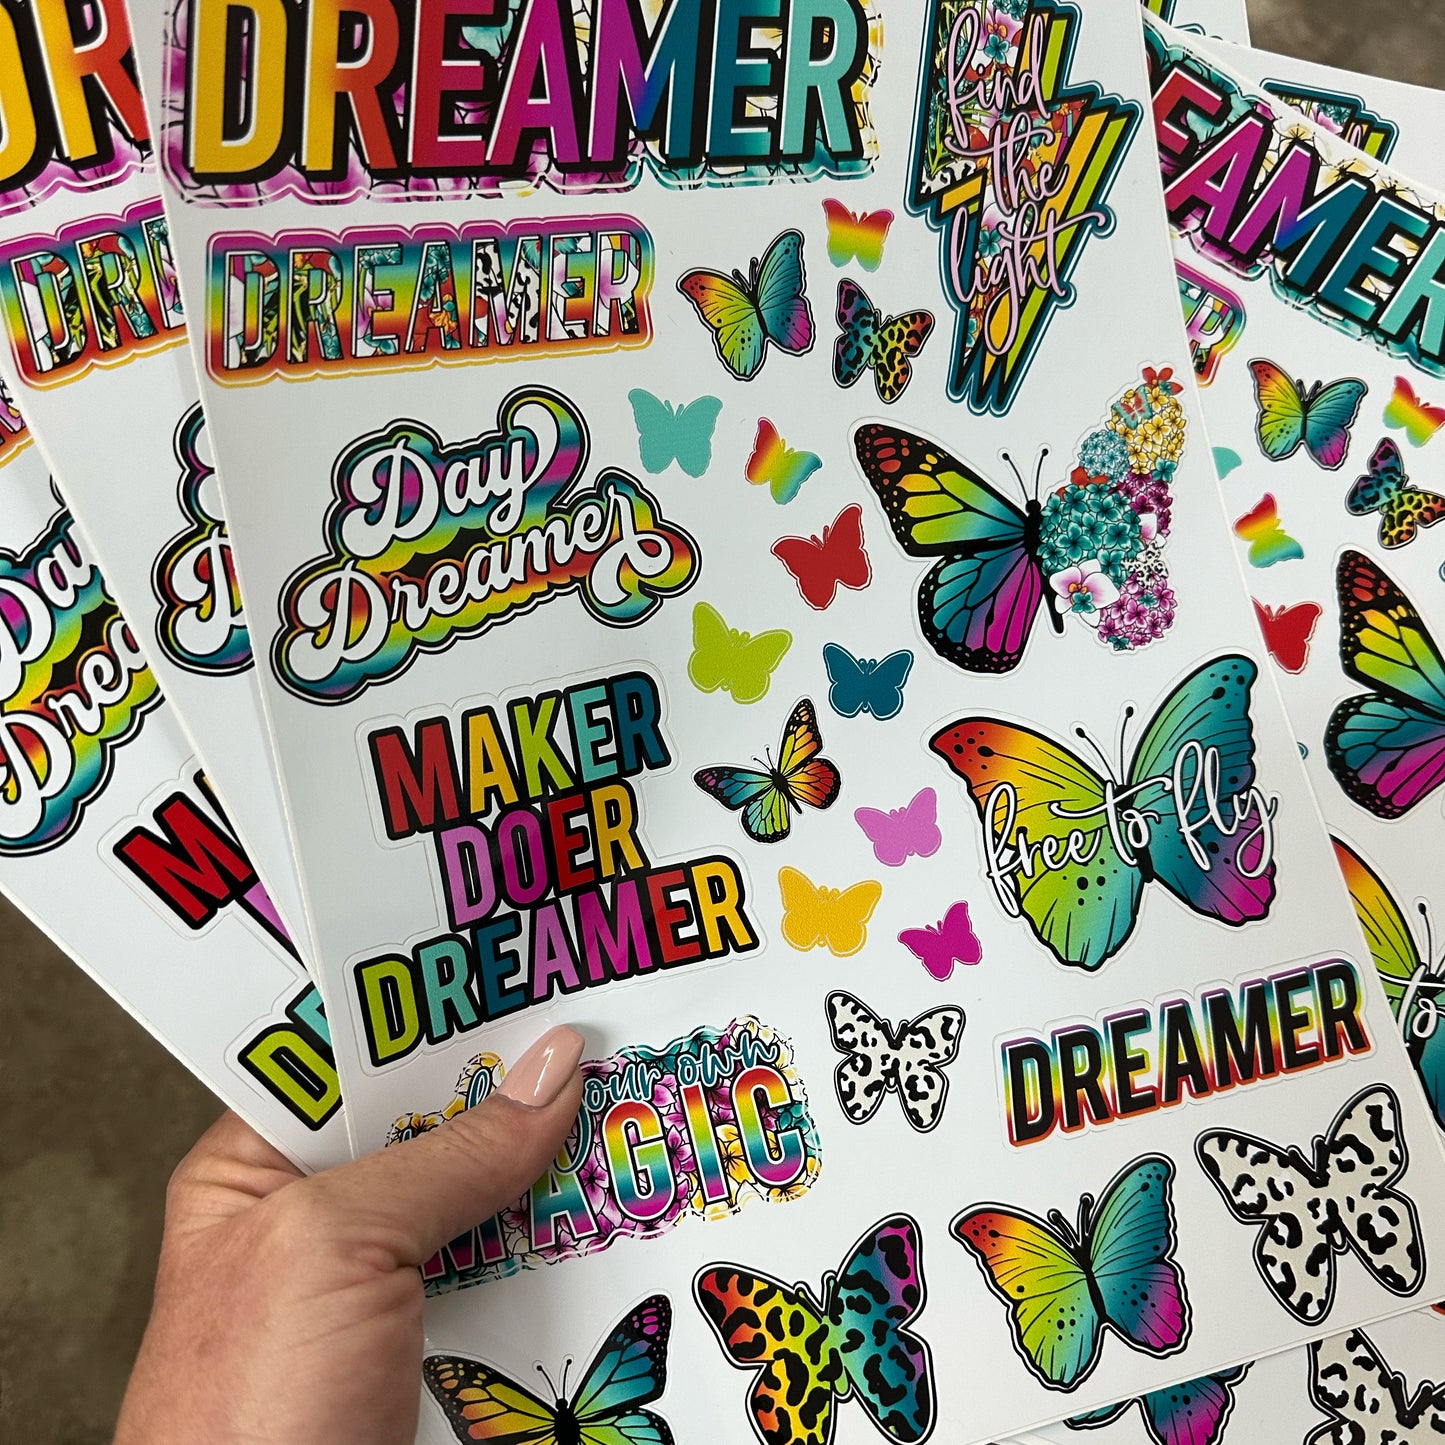 Dreamer Box - Large Decal Sheet